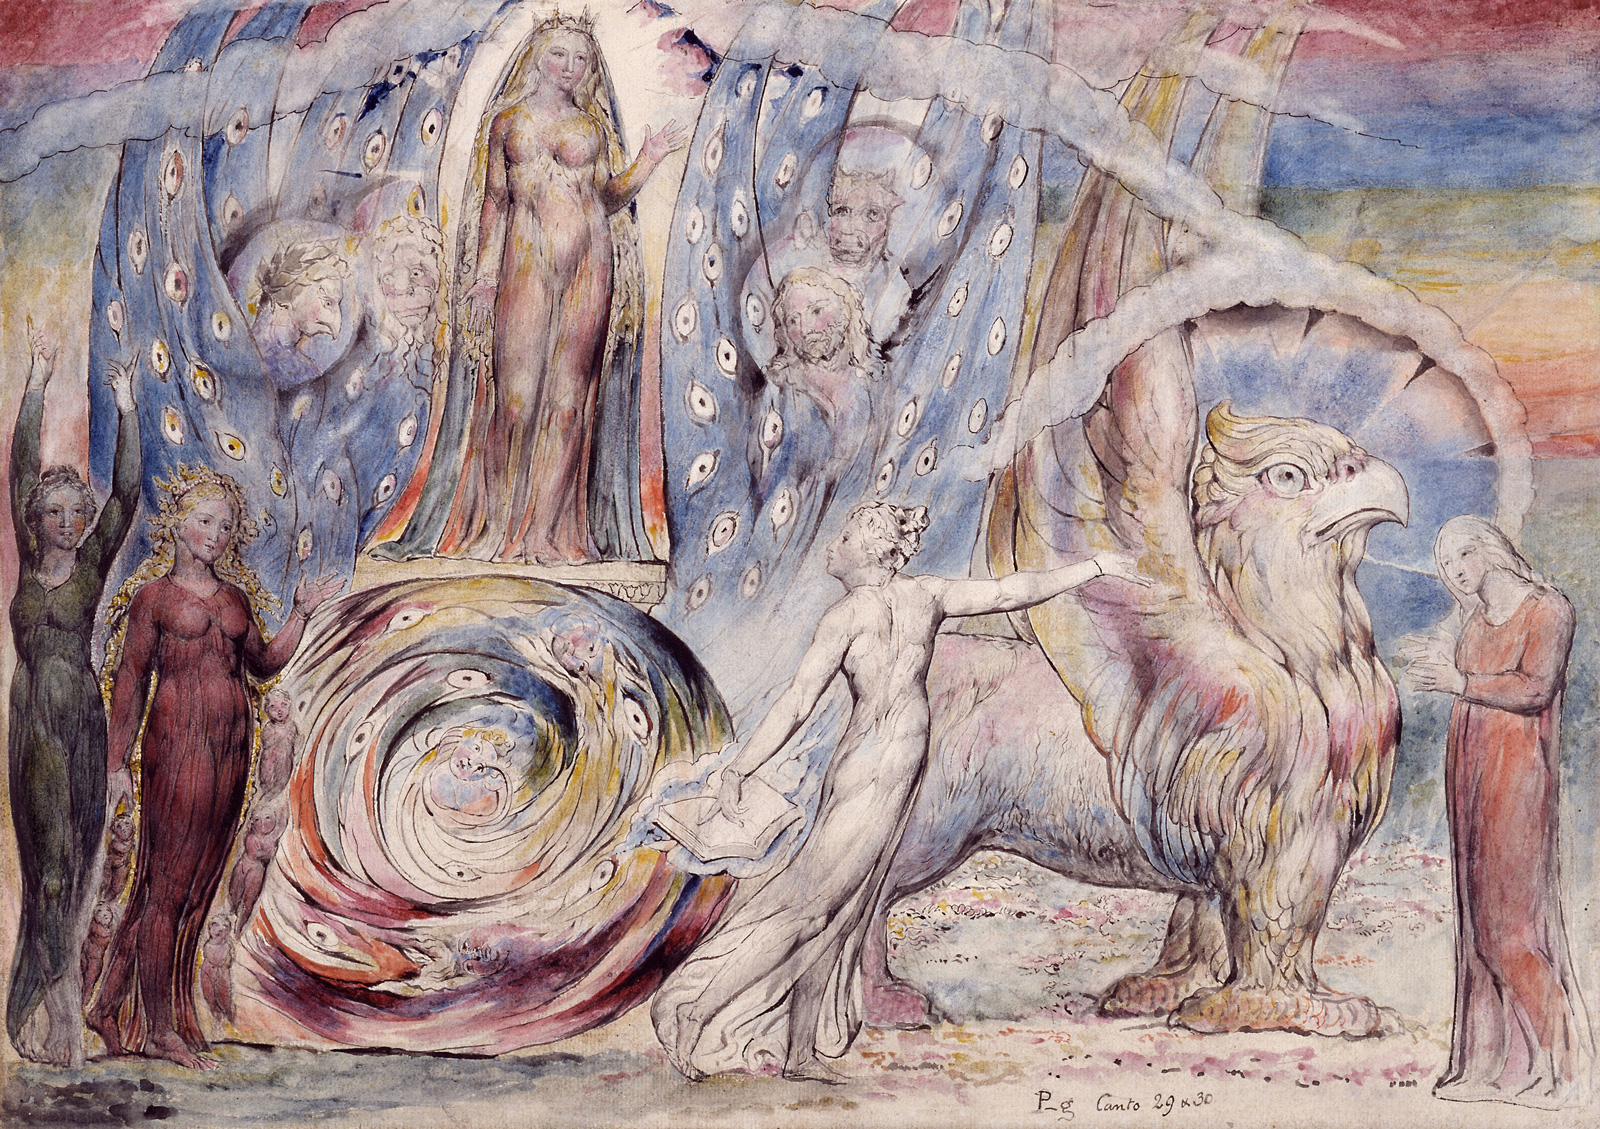 William Blake's Visionary Imagination